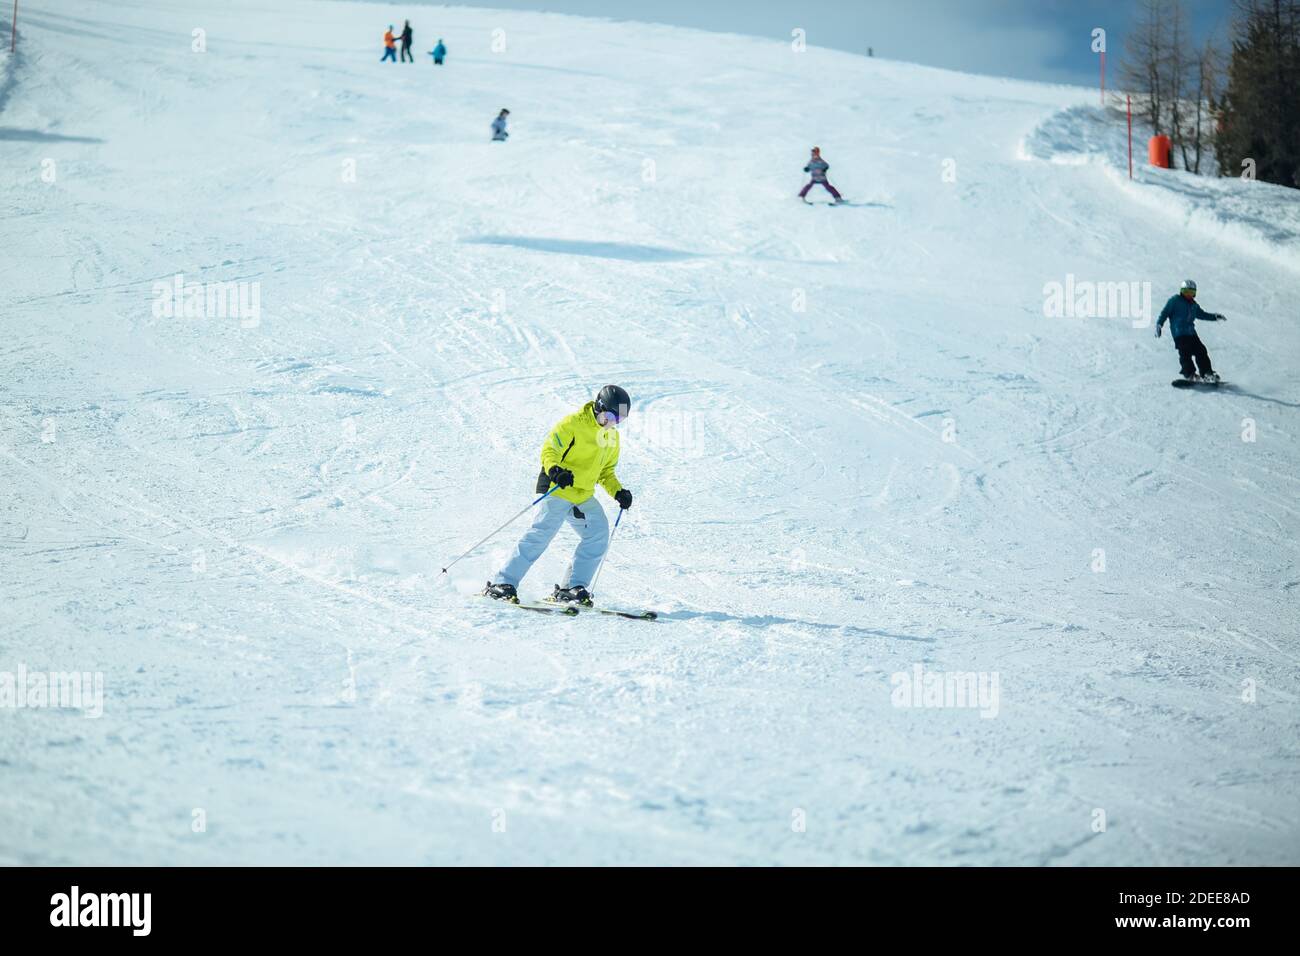 KREISCHBERG, MURAU, AUSTRIA - MARCH 15, 2017: Group of skiers riding the ski slope. Kreischberg is a populer ski resort in Austria Stock Photo